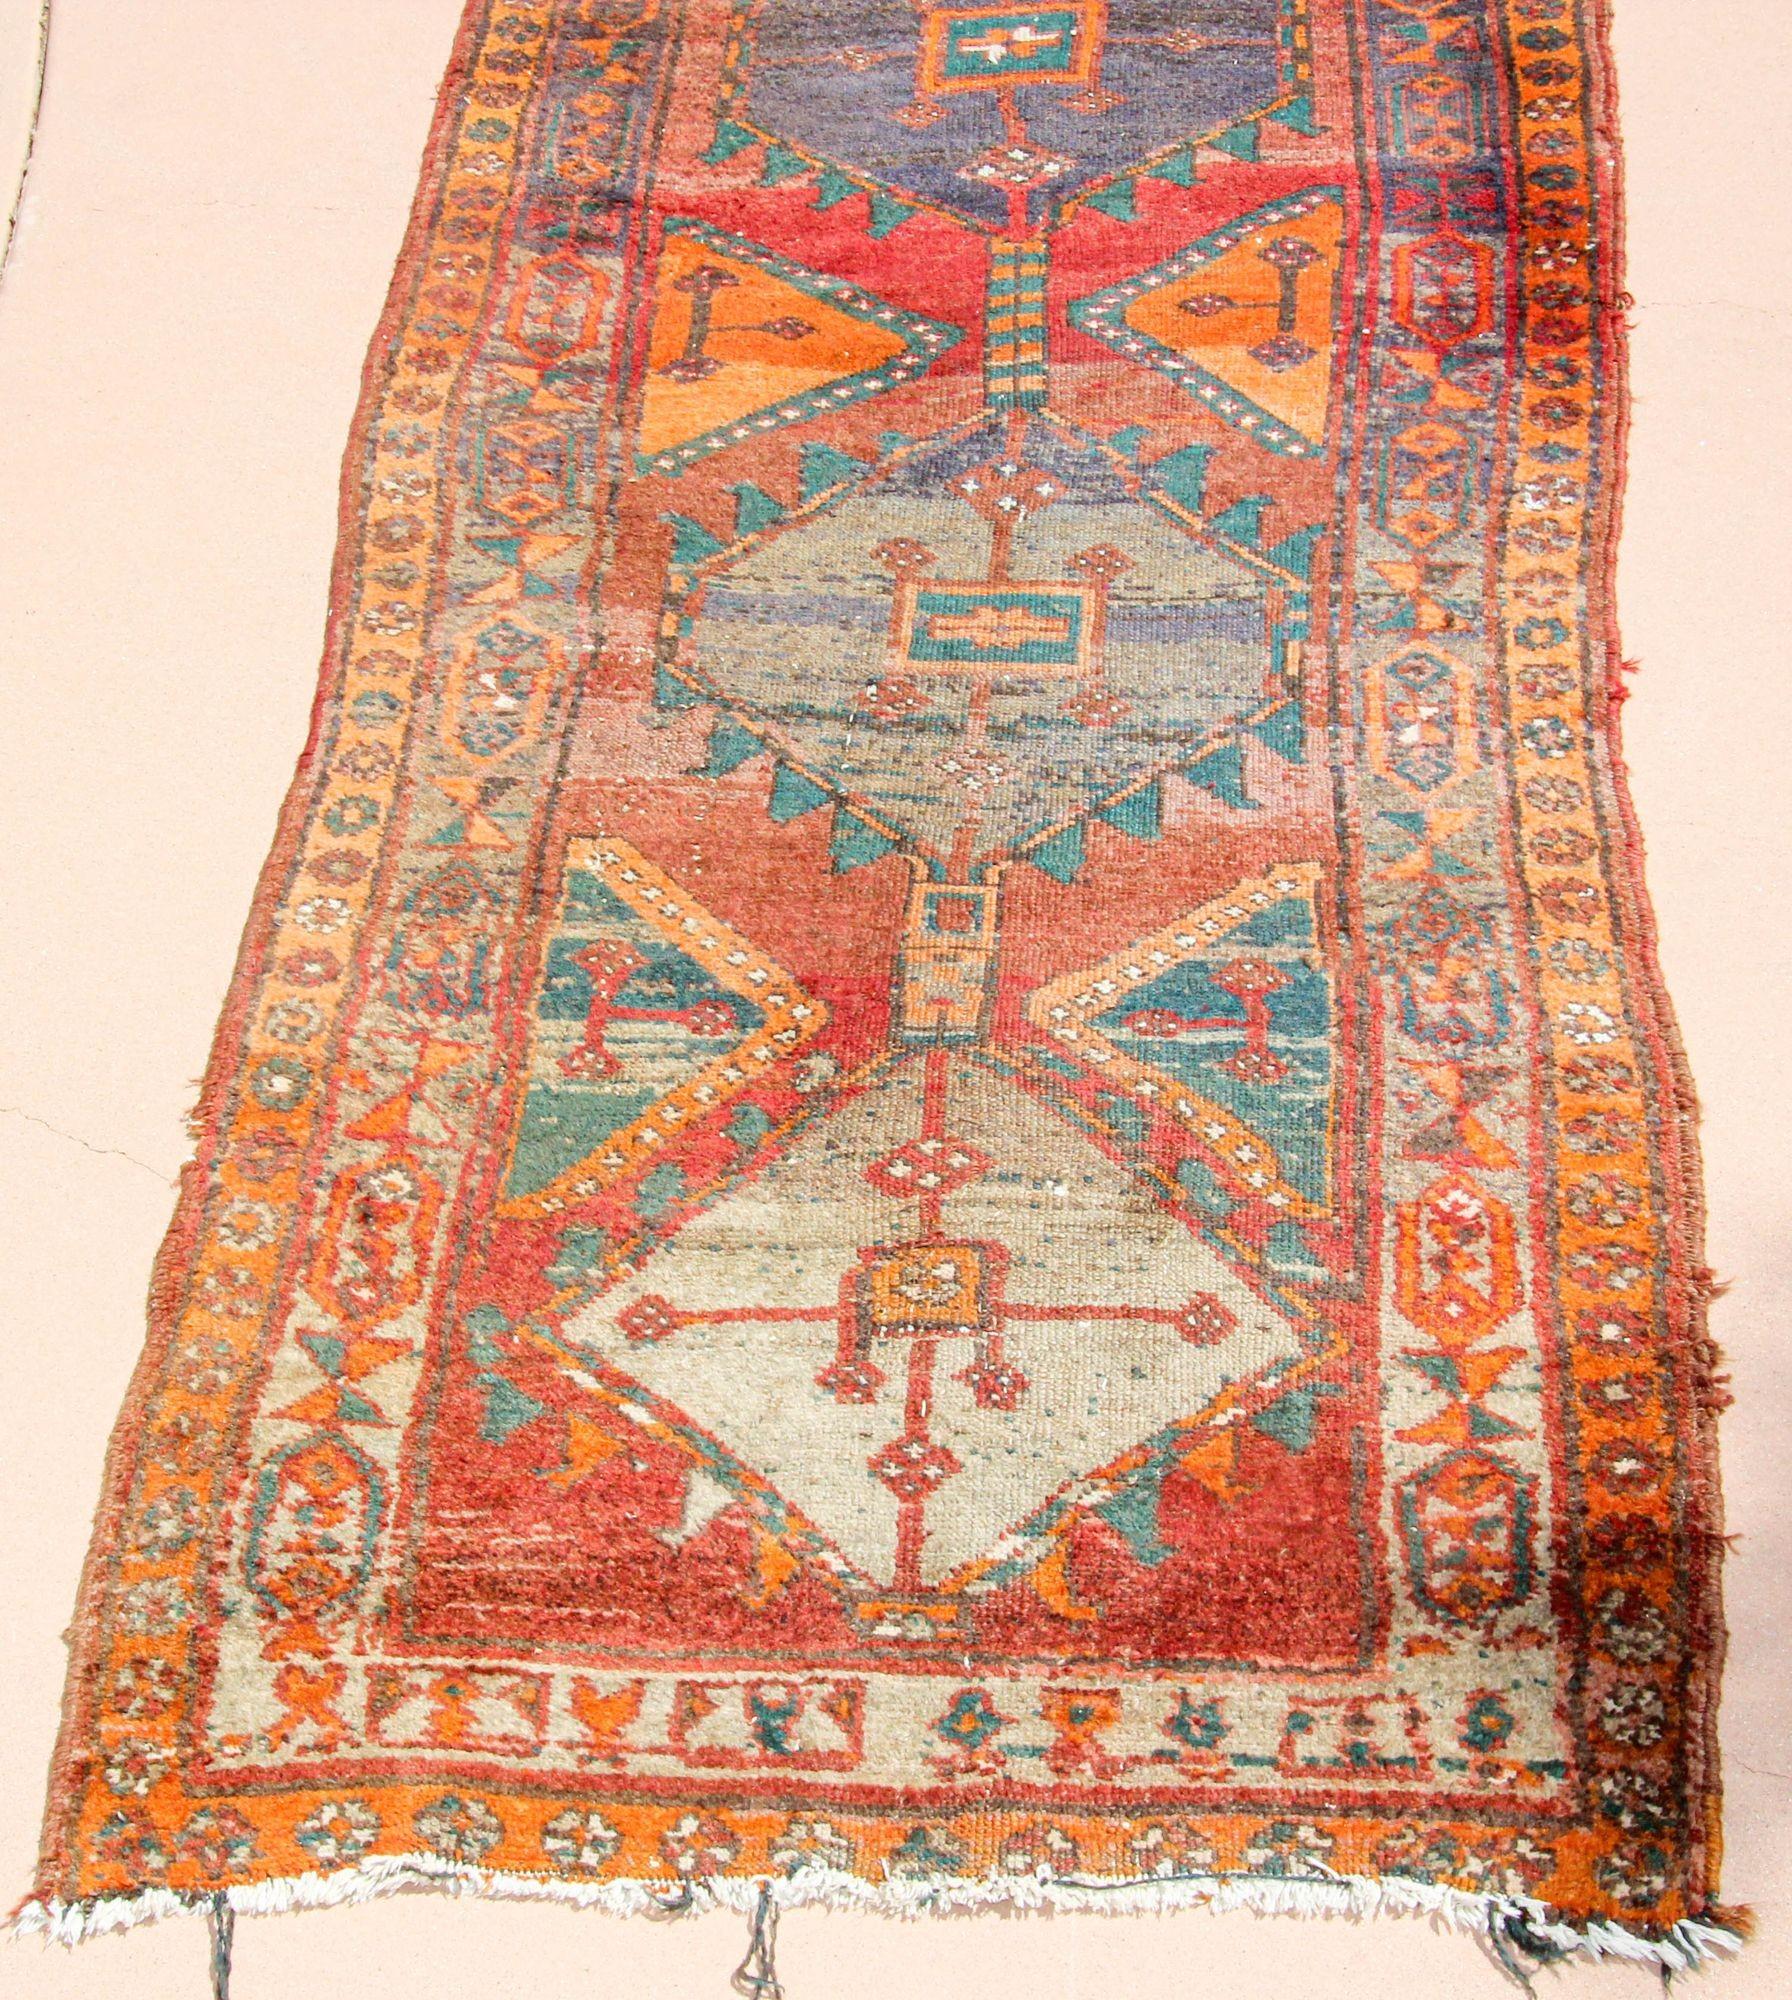 Folk Art 1950s Hand Knotted Vintage Carpet Rug Runner from Turkey For Sale